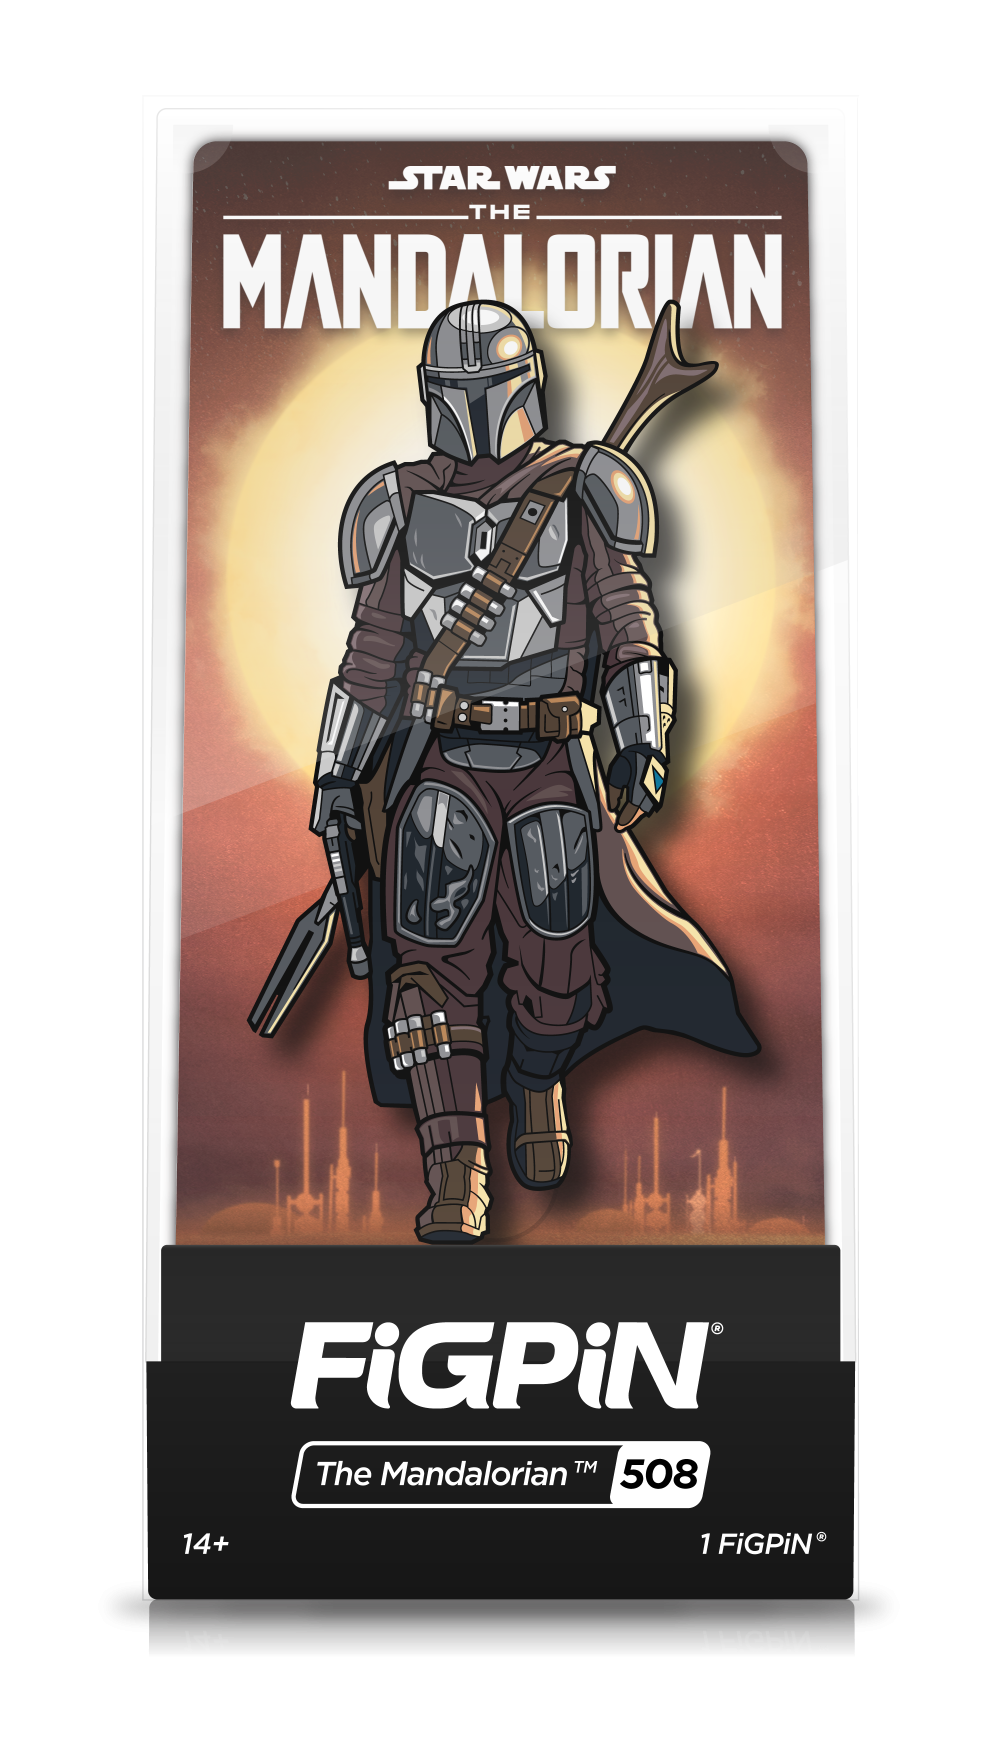 FiGPiN - Star Wars: The Mandalorian (#508) 3" Collector Pin